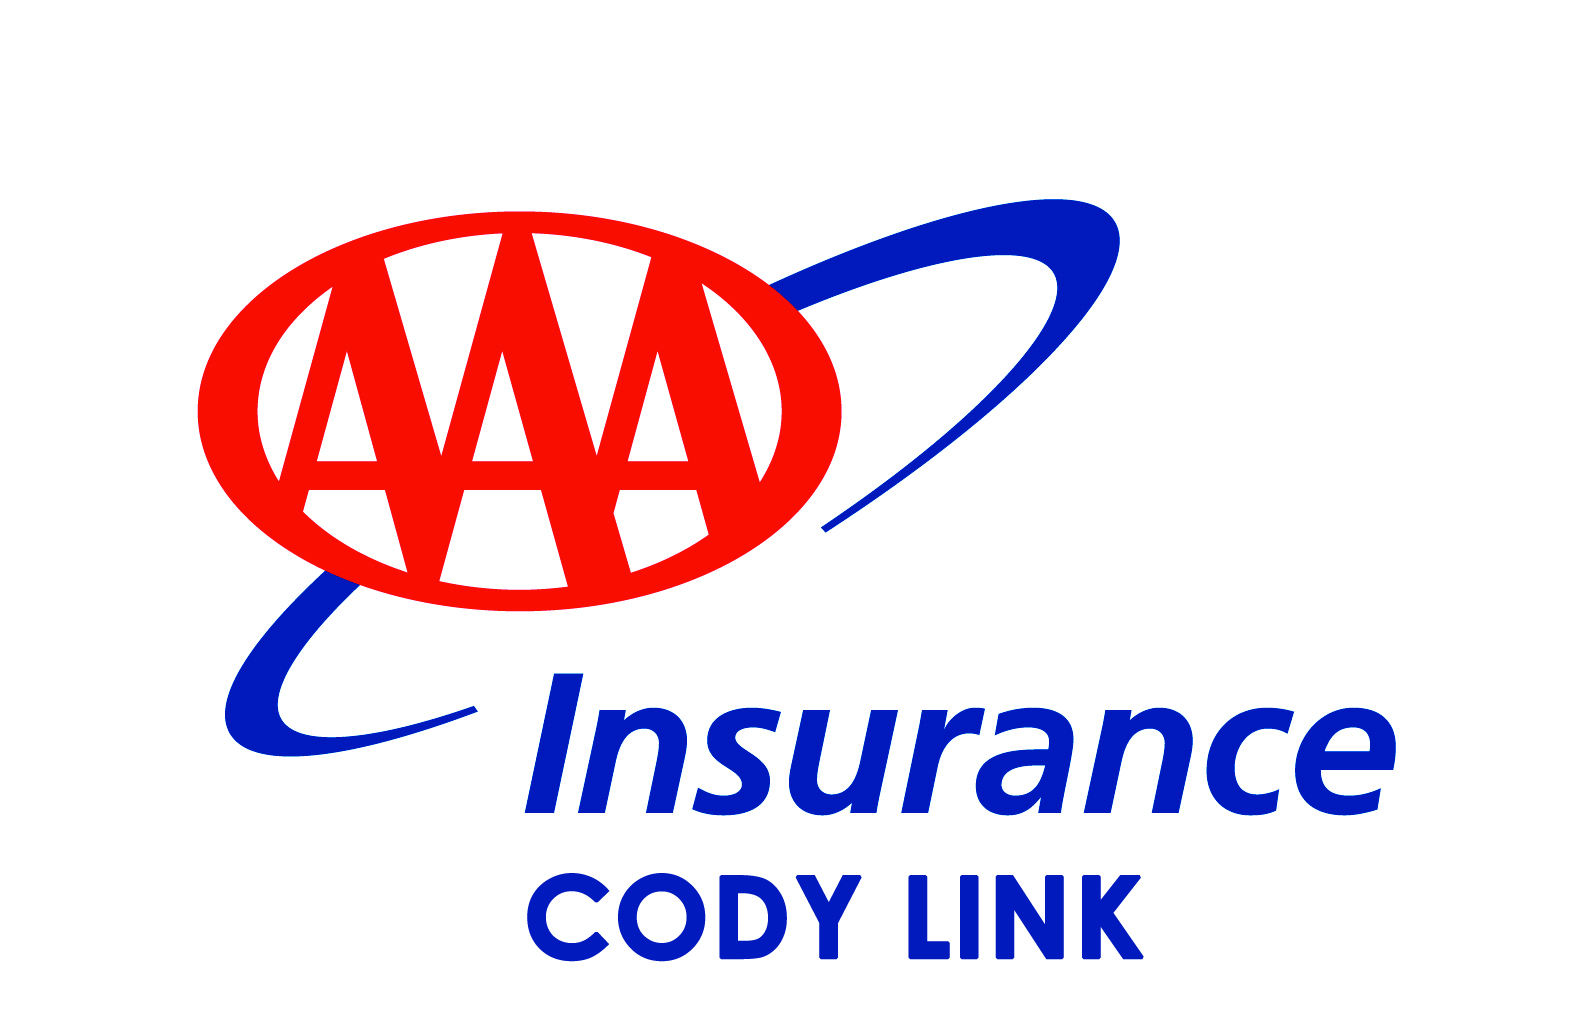 AAA Insurance - Cody Link logo